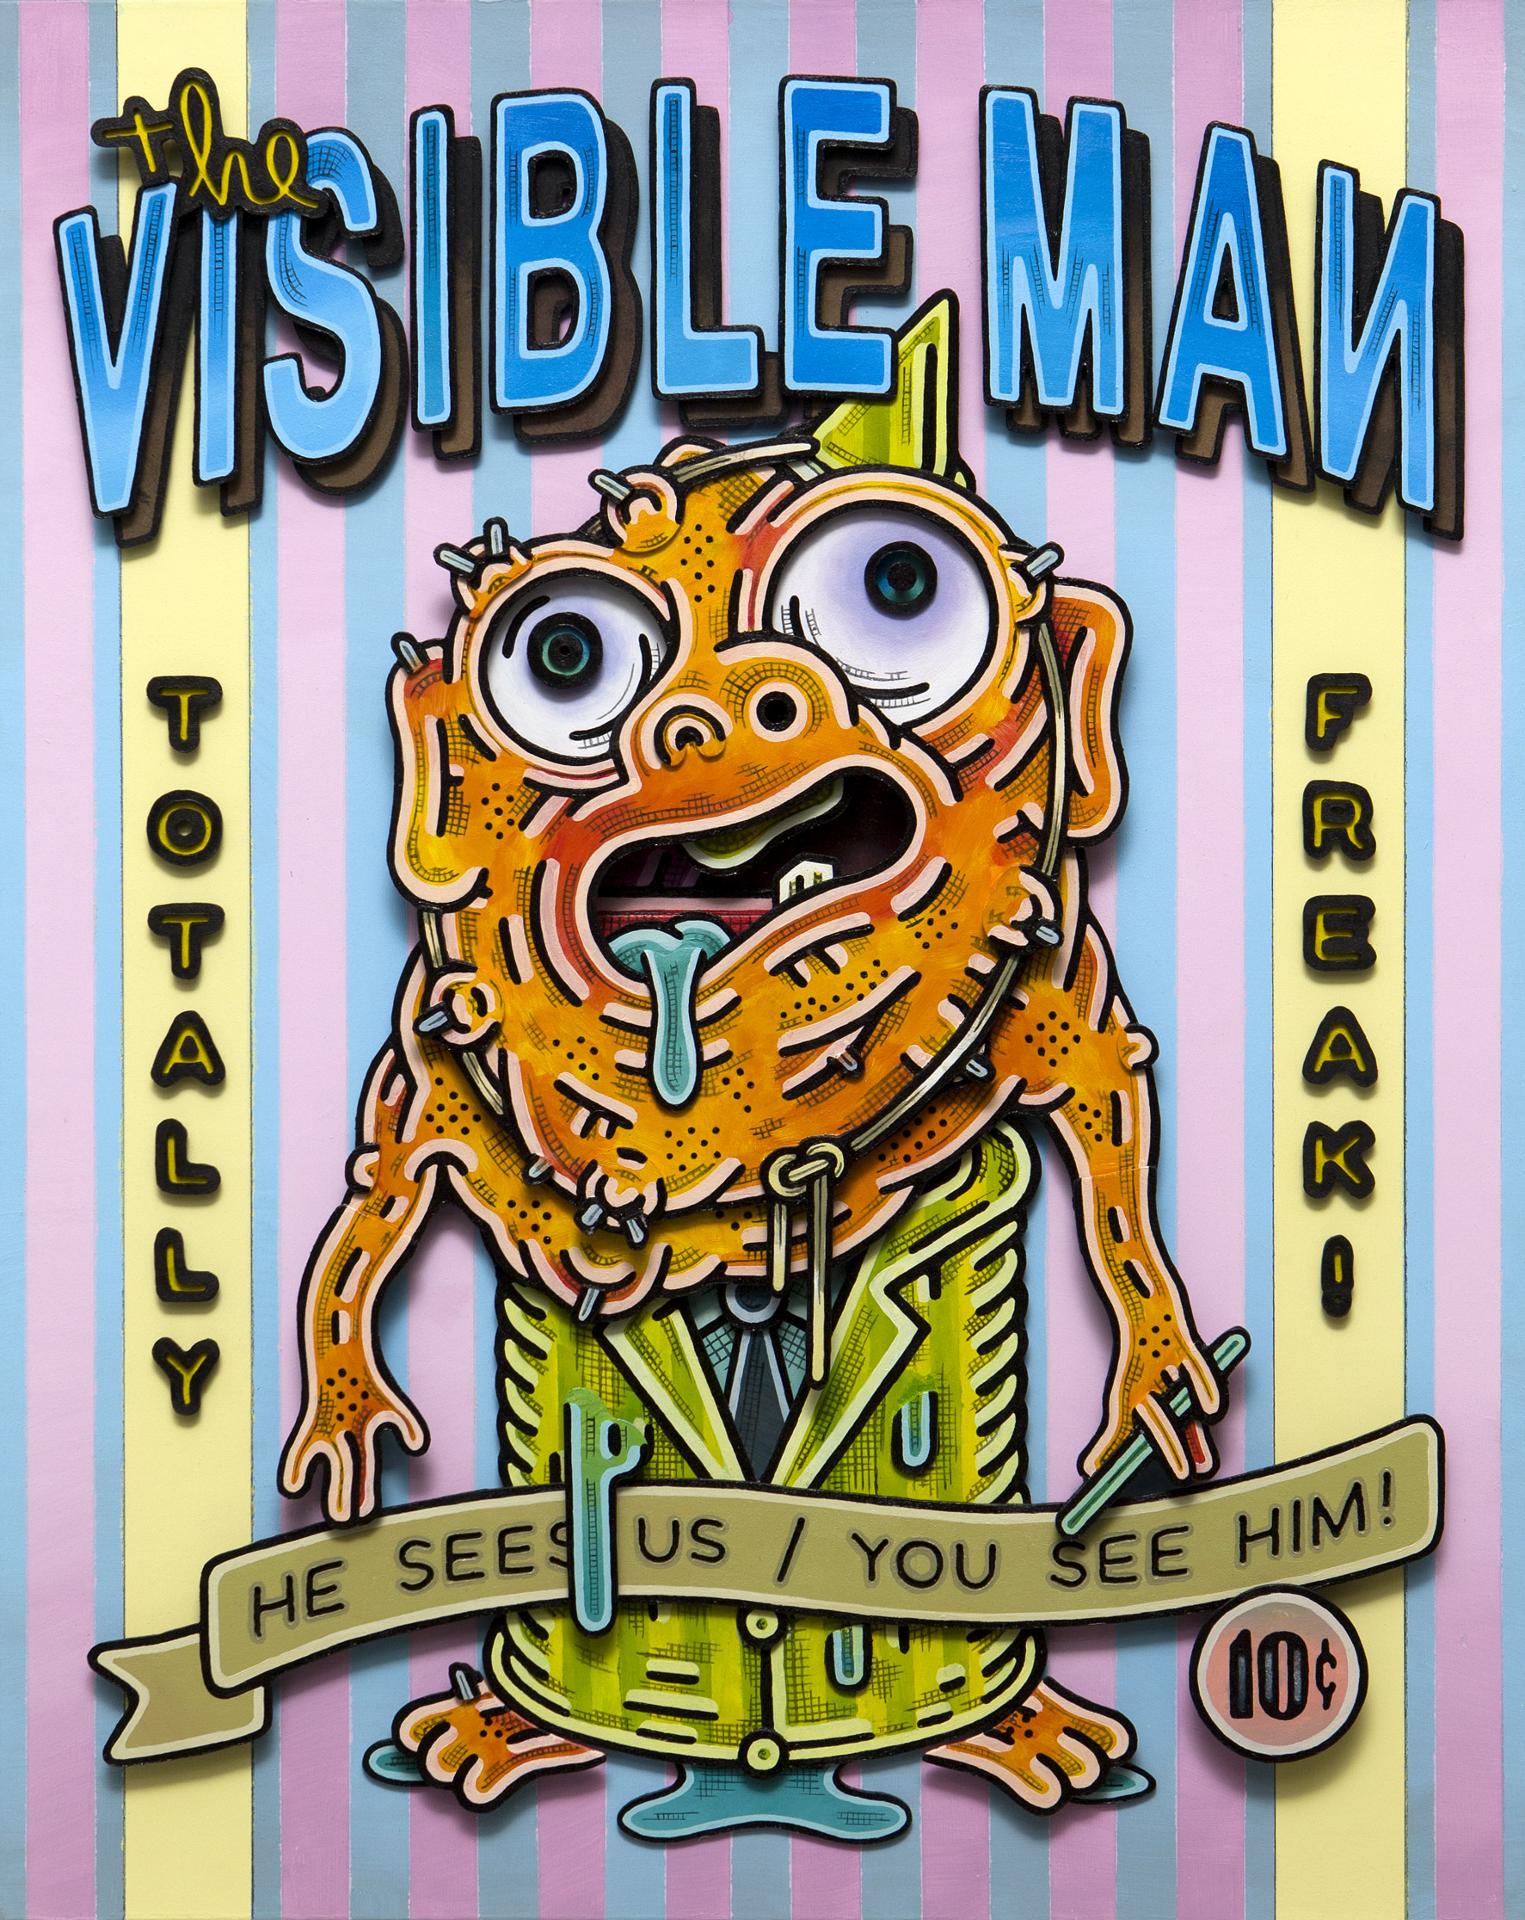 Henriette Valium (1959) - The Visible Man